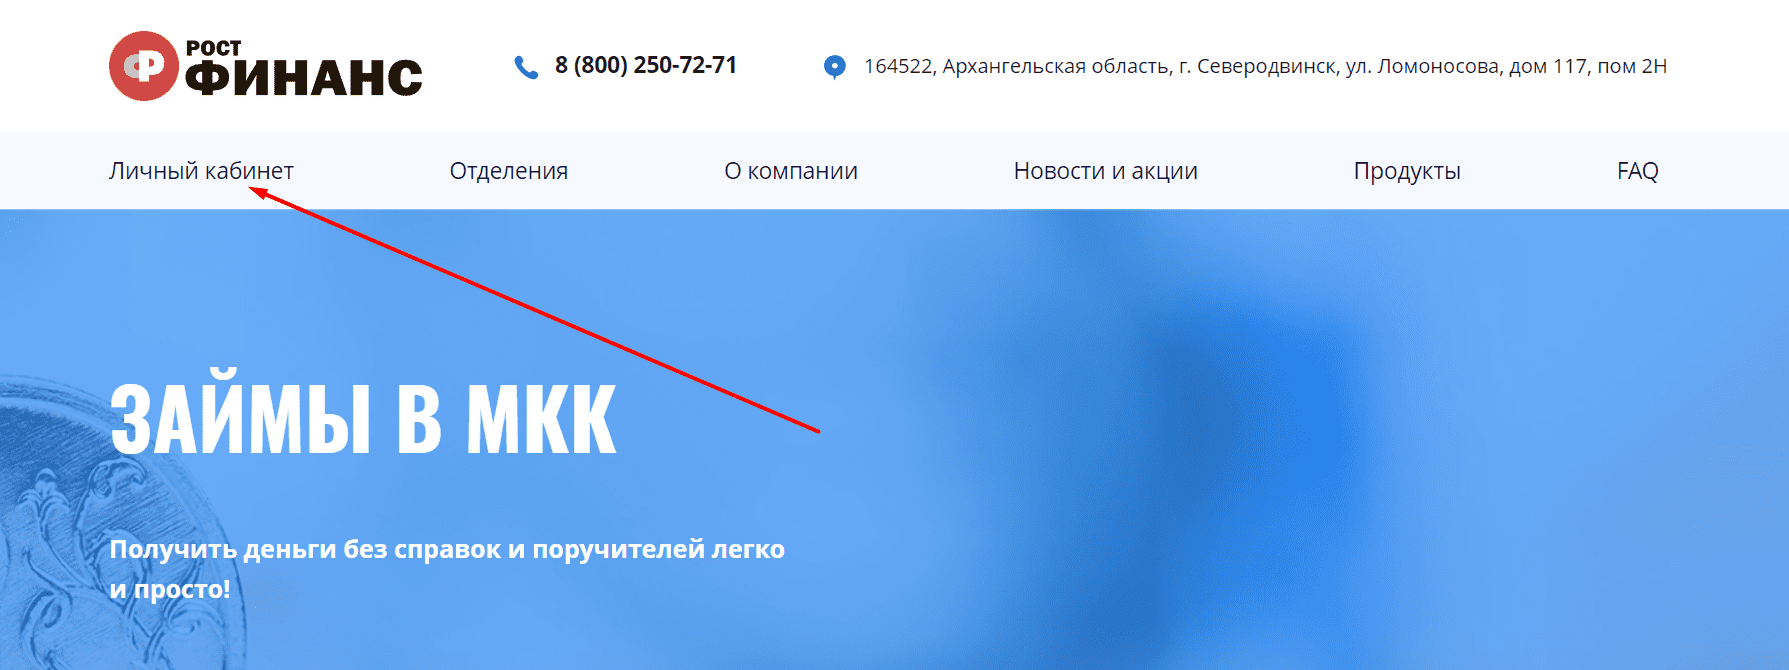 Ростфинанс (roctfinance.ru)